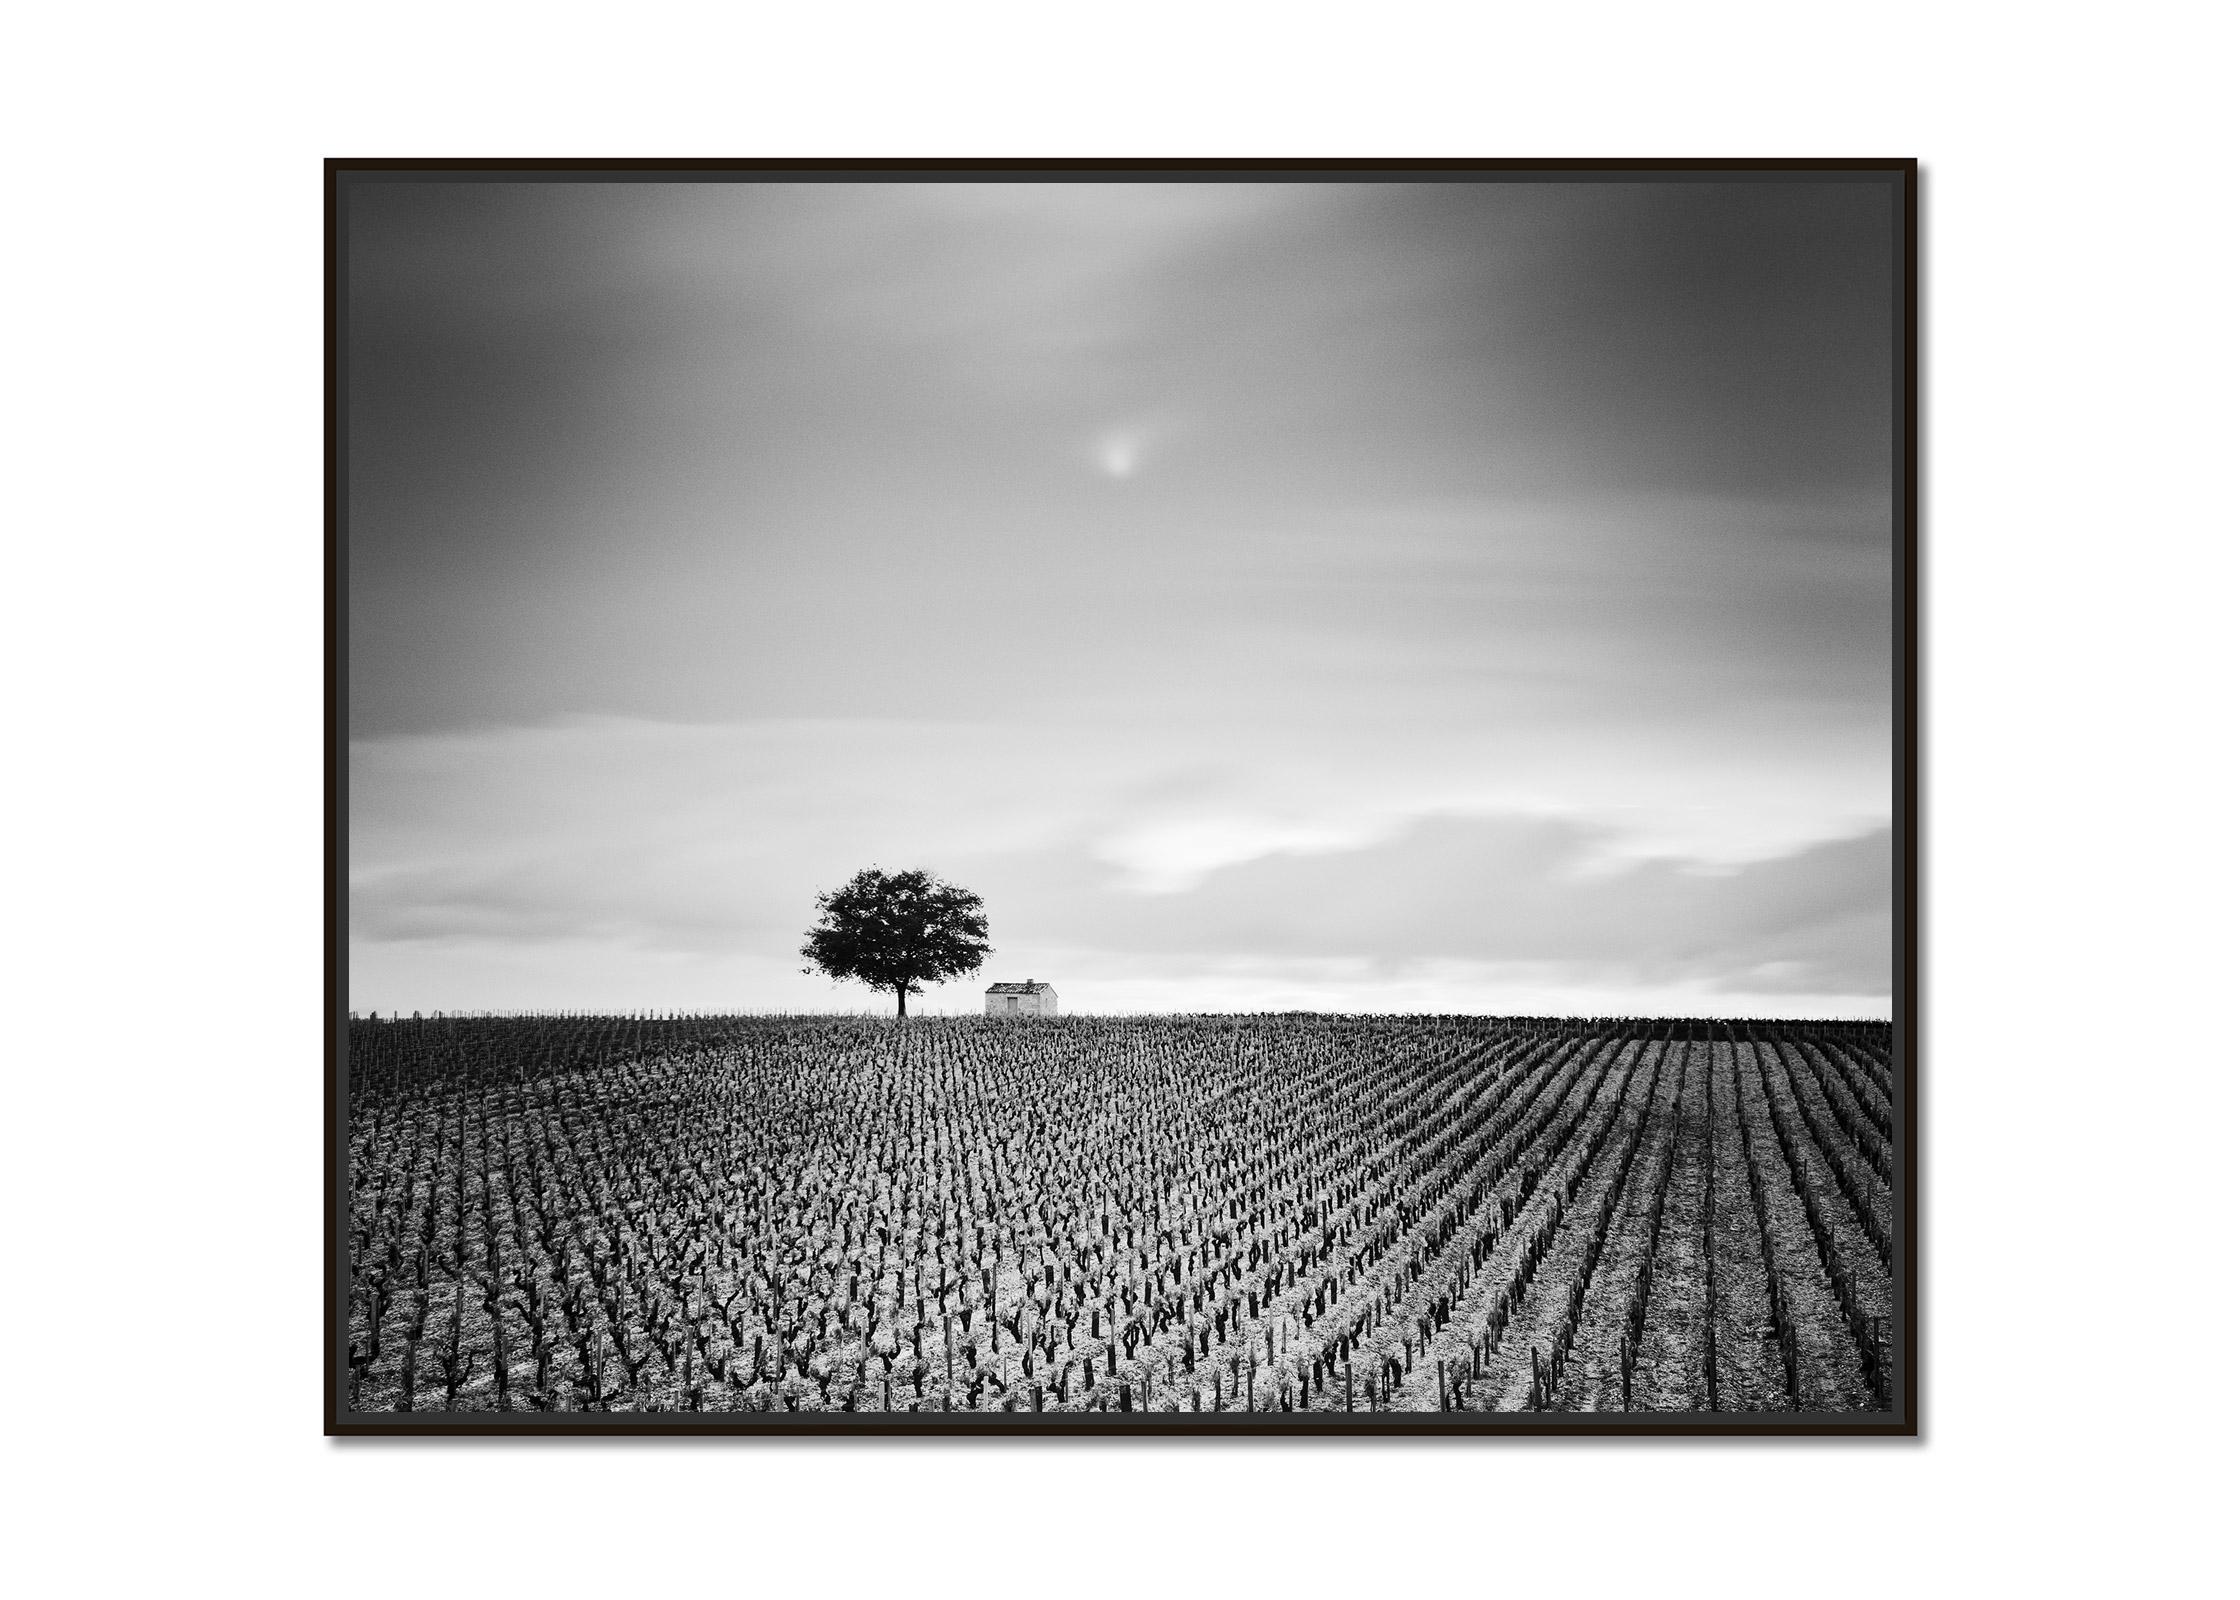 Champagne Paradise, single Tree, Vineyard, France, black & white landscape photo - Photograph by Gerald Berghammer